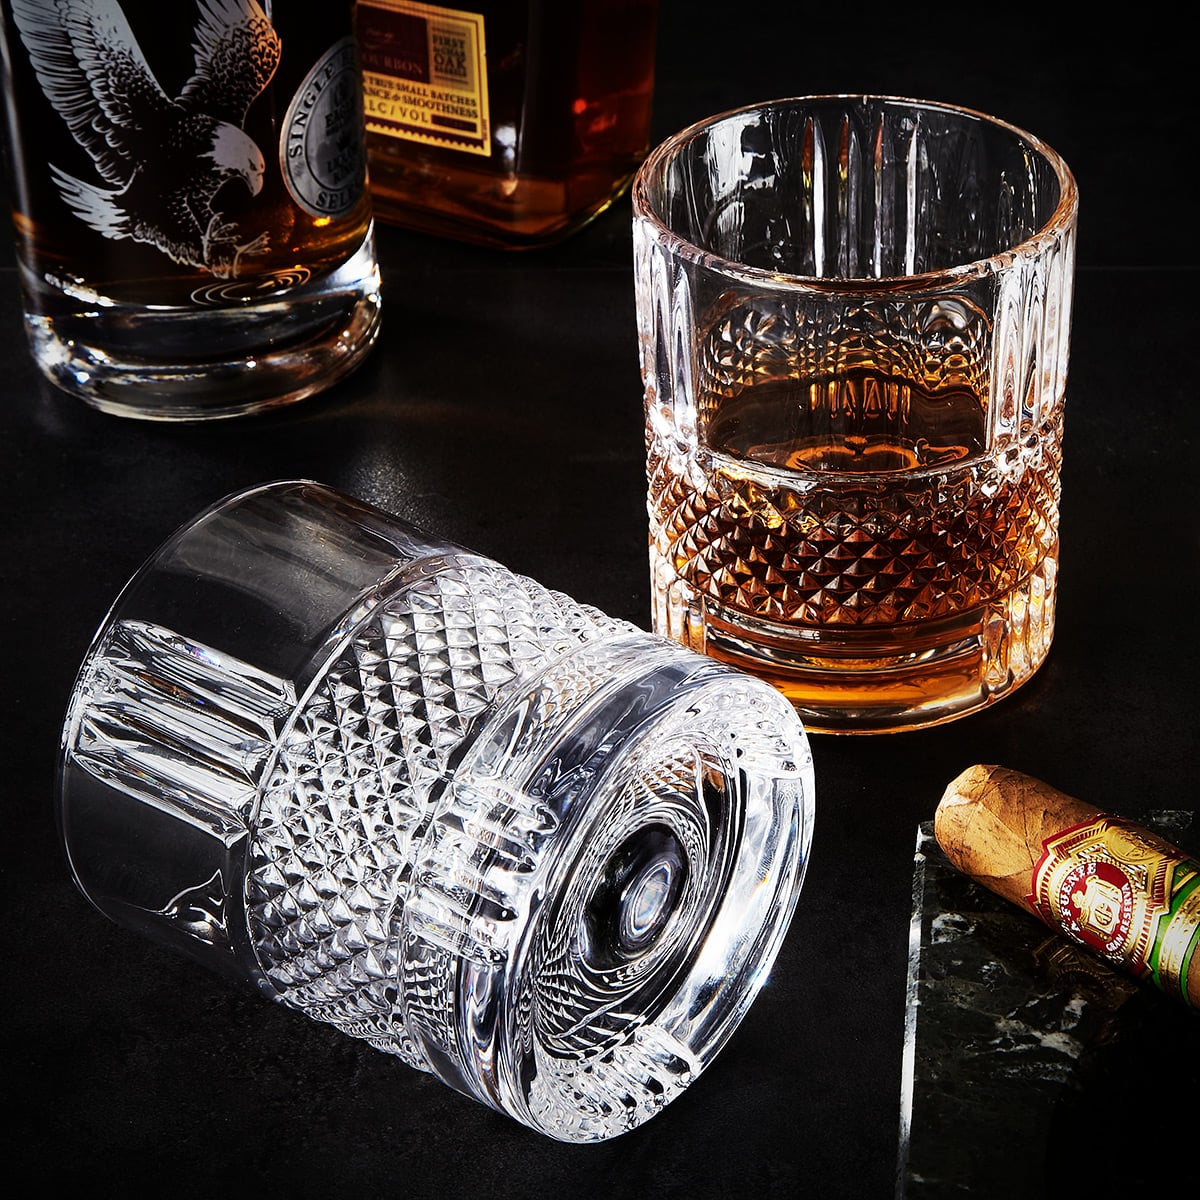 Eston Whiskey Gift Set with Spinning Rocks Glasses